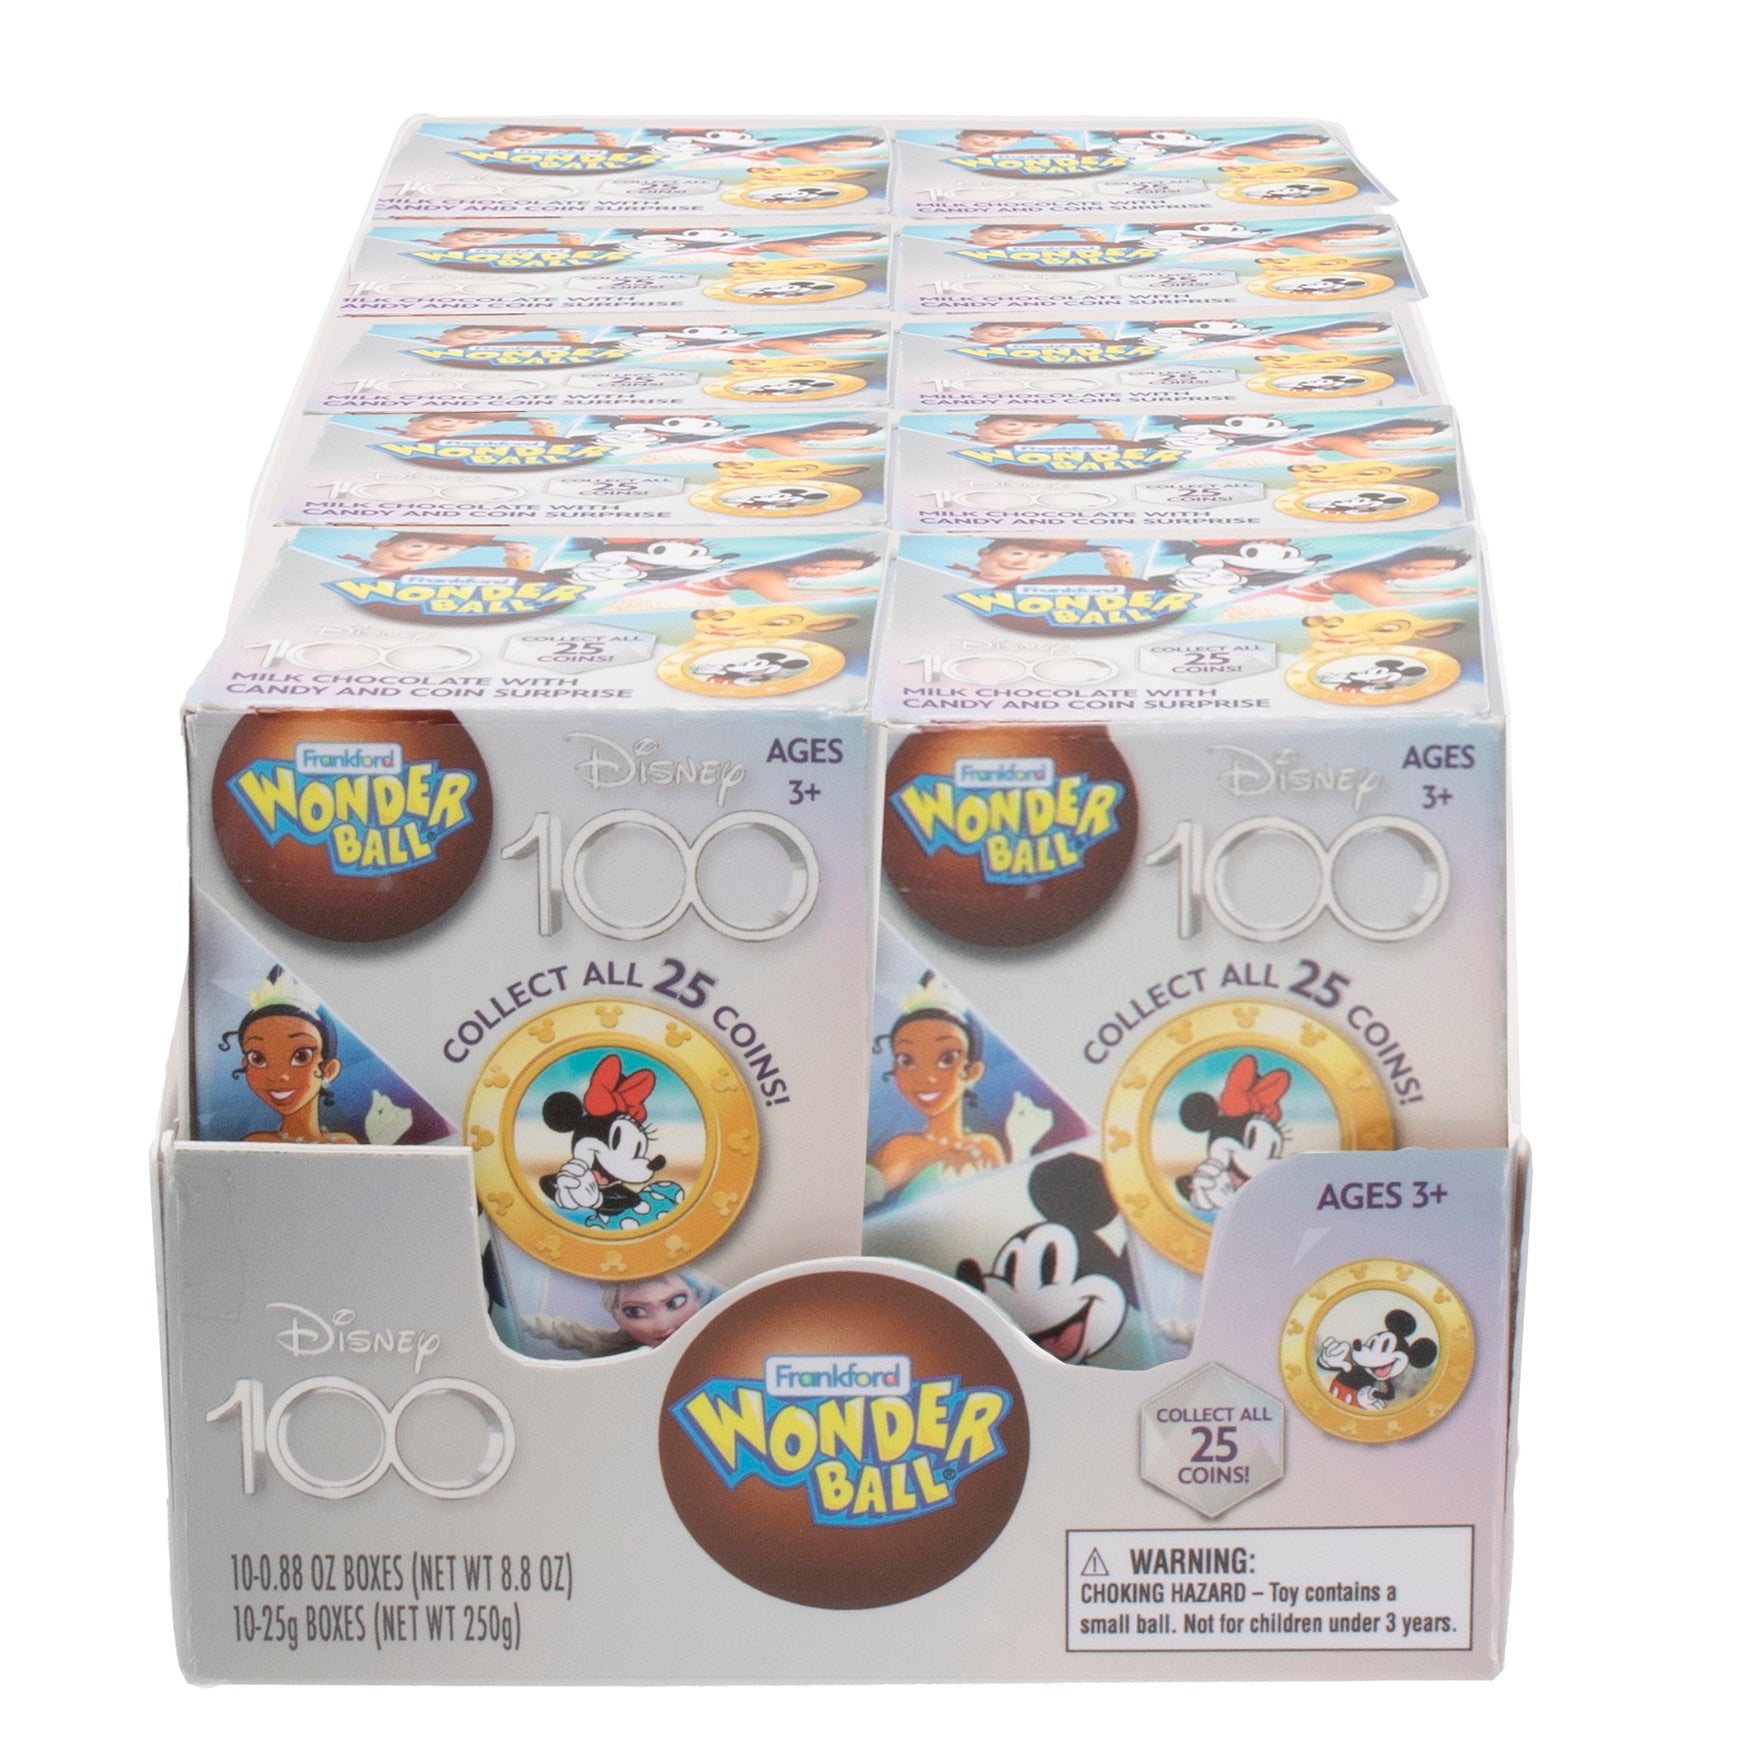 Wonder Ball® Super Mario™ Milk Chocolate